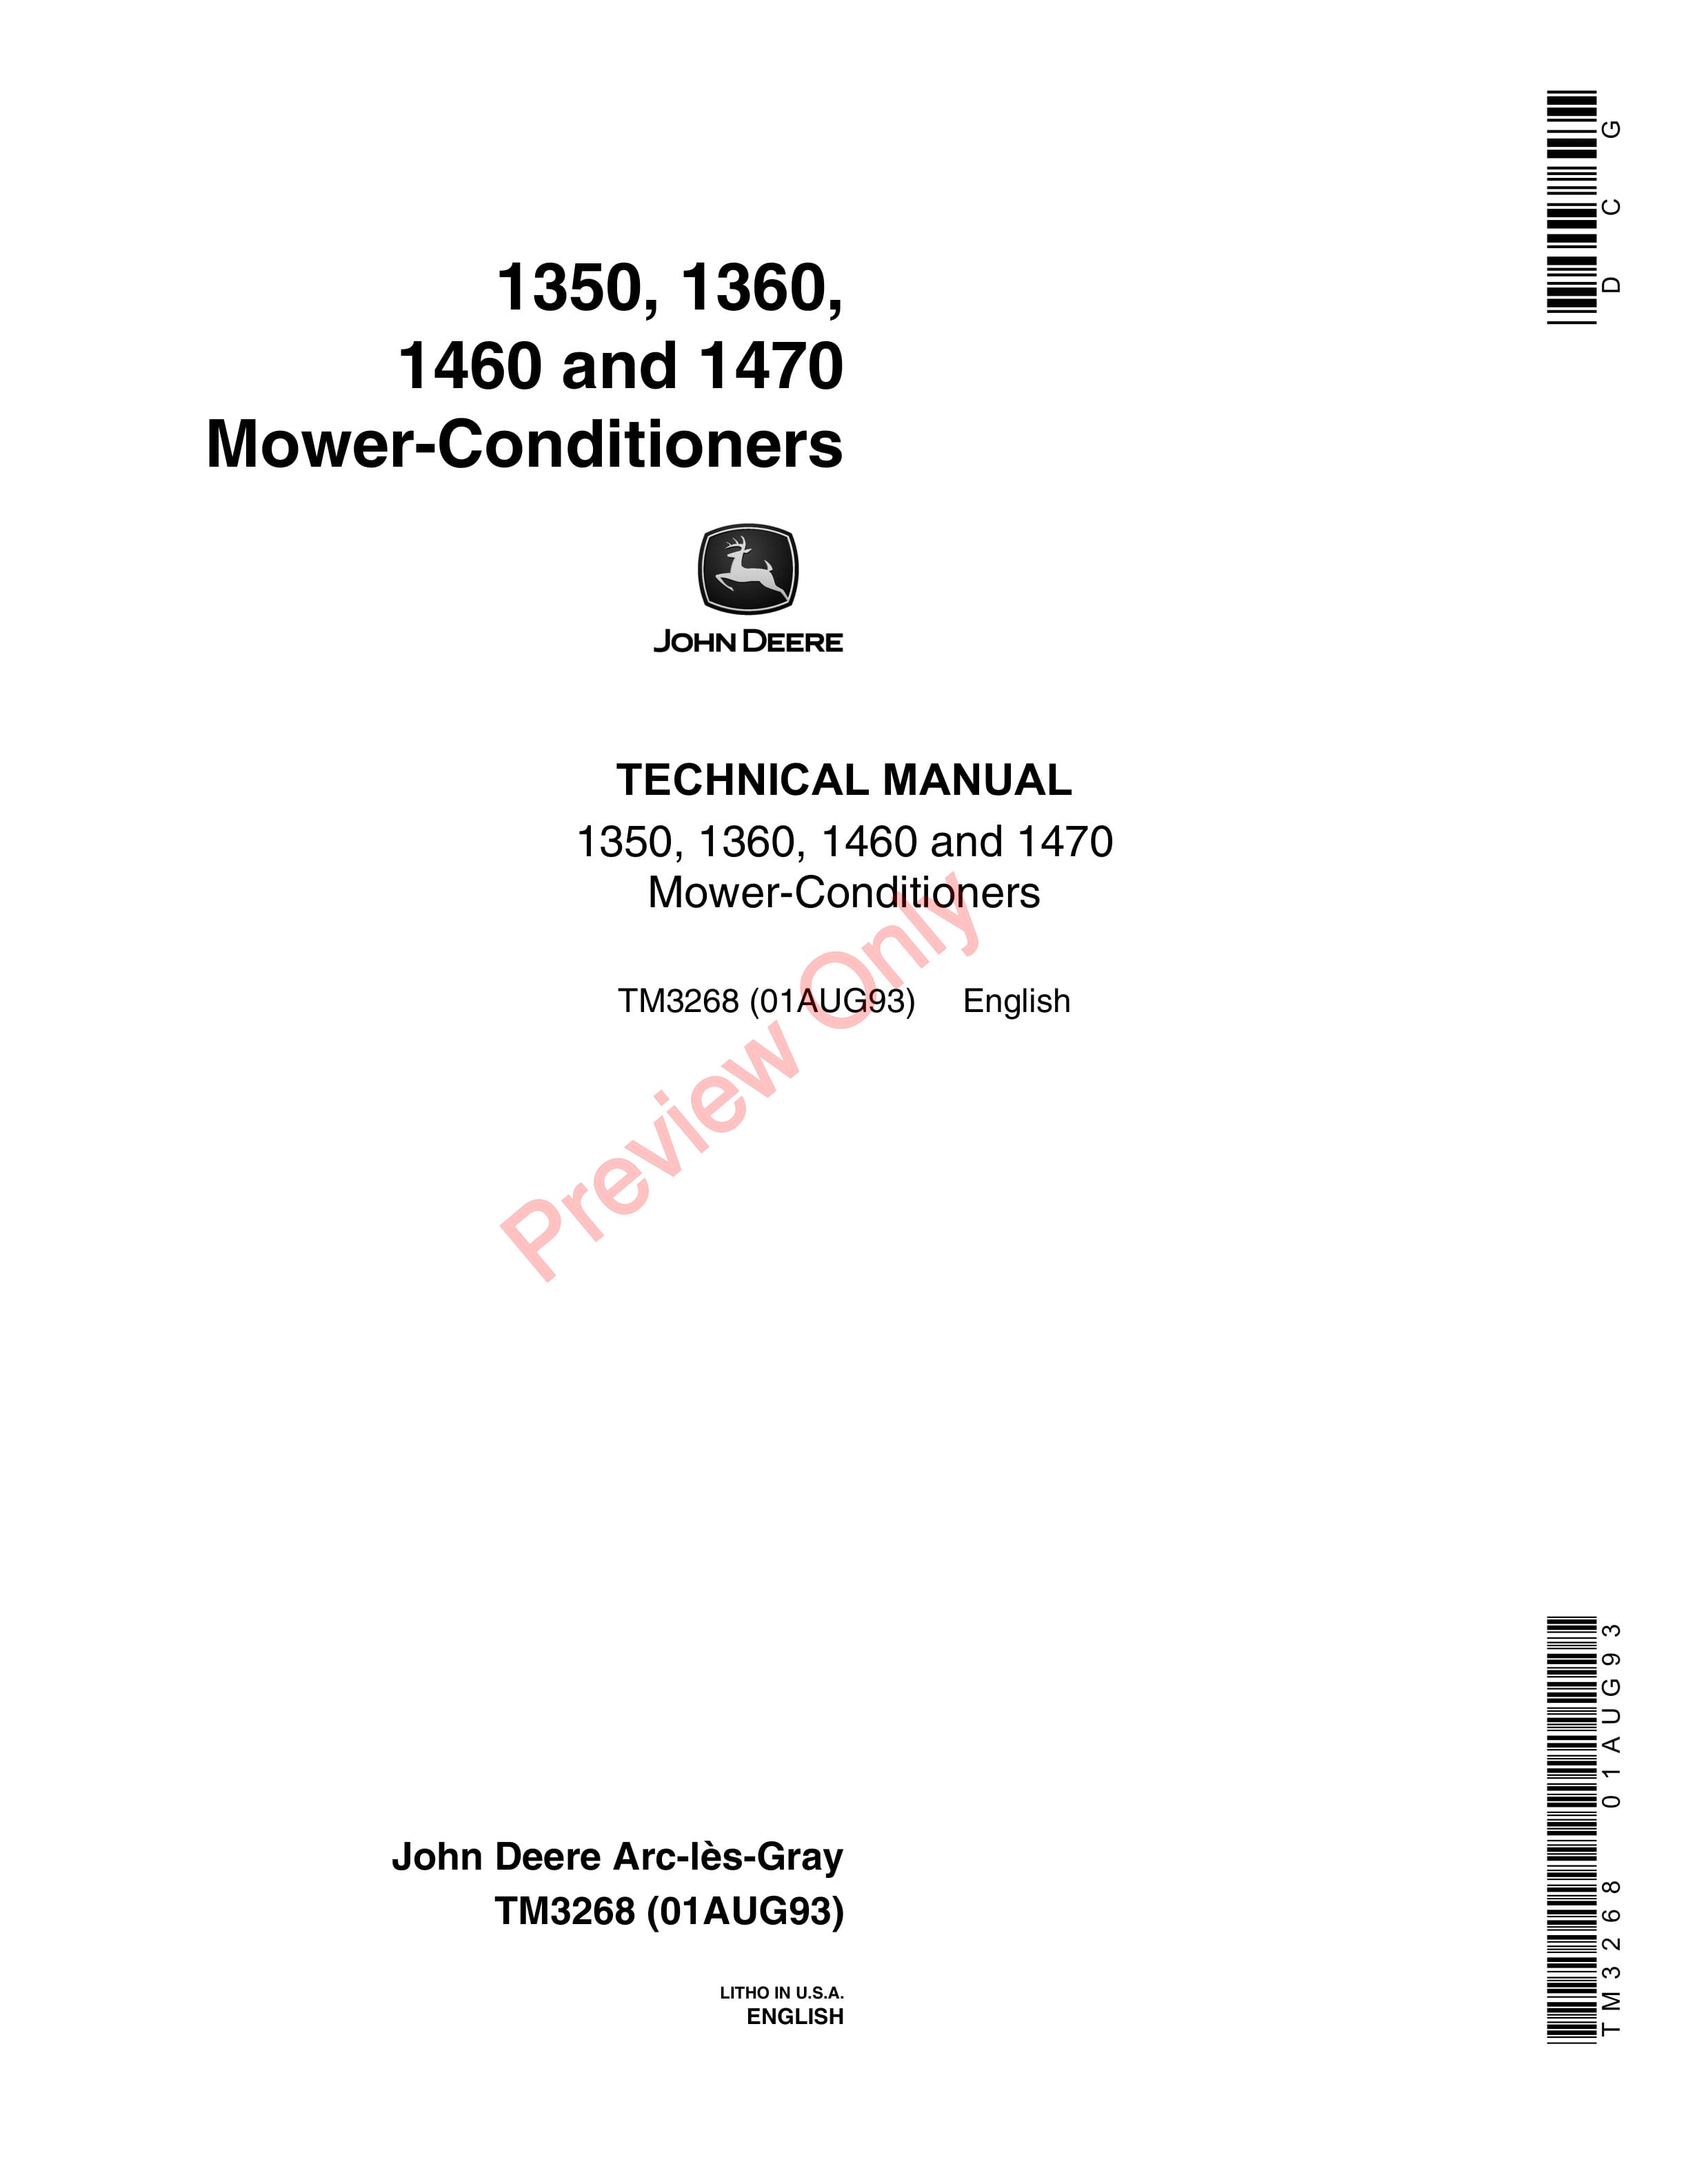 John Deere 1350 1360 1460 1470 Mower Conditioner Technical Manual TM3268 01AUG93 1